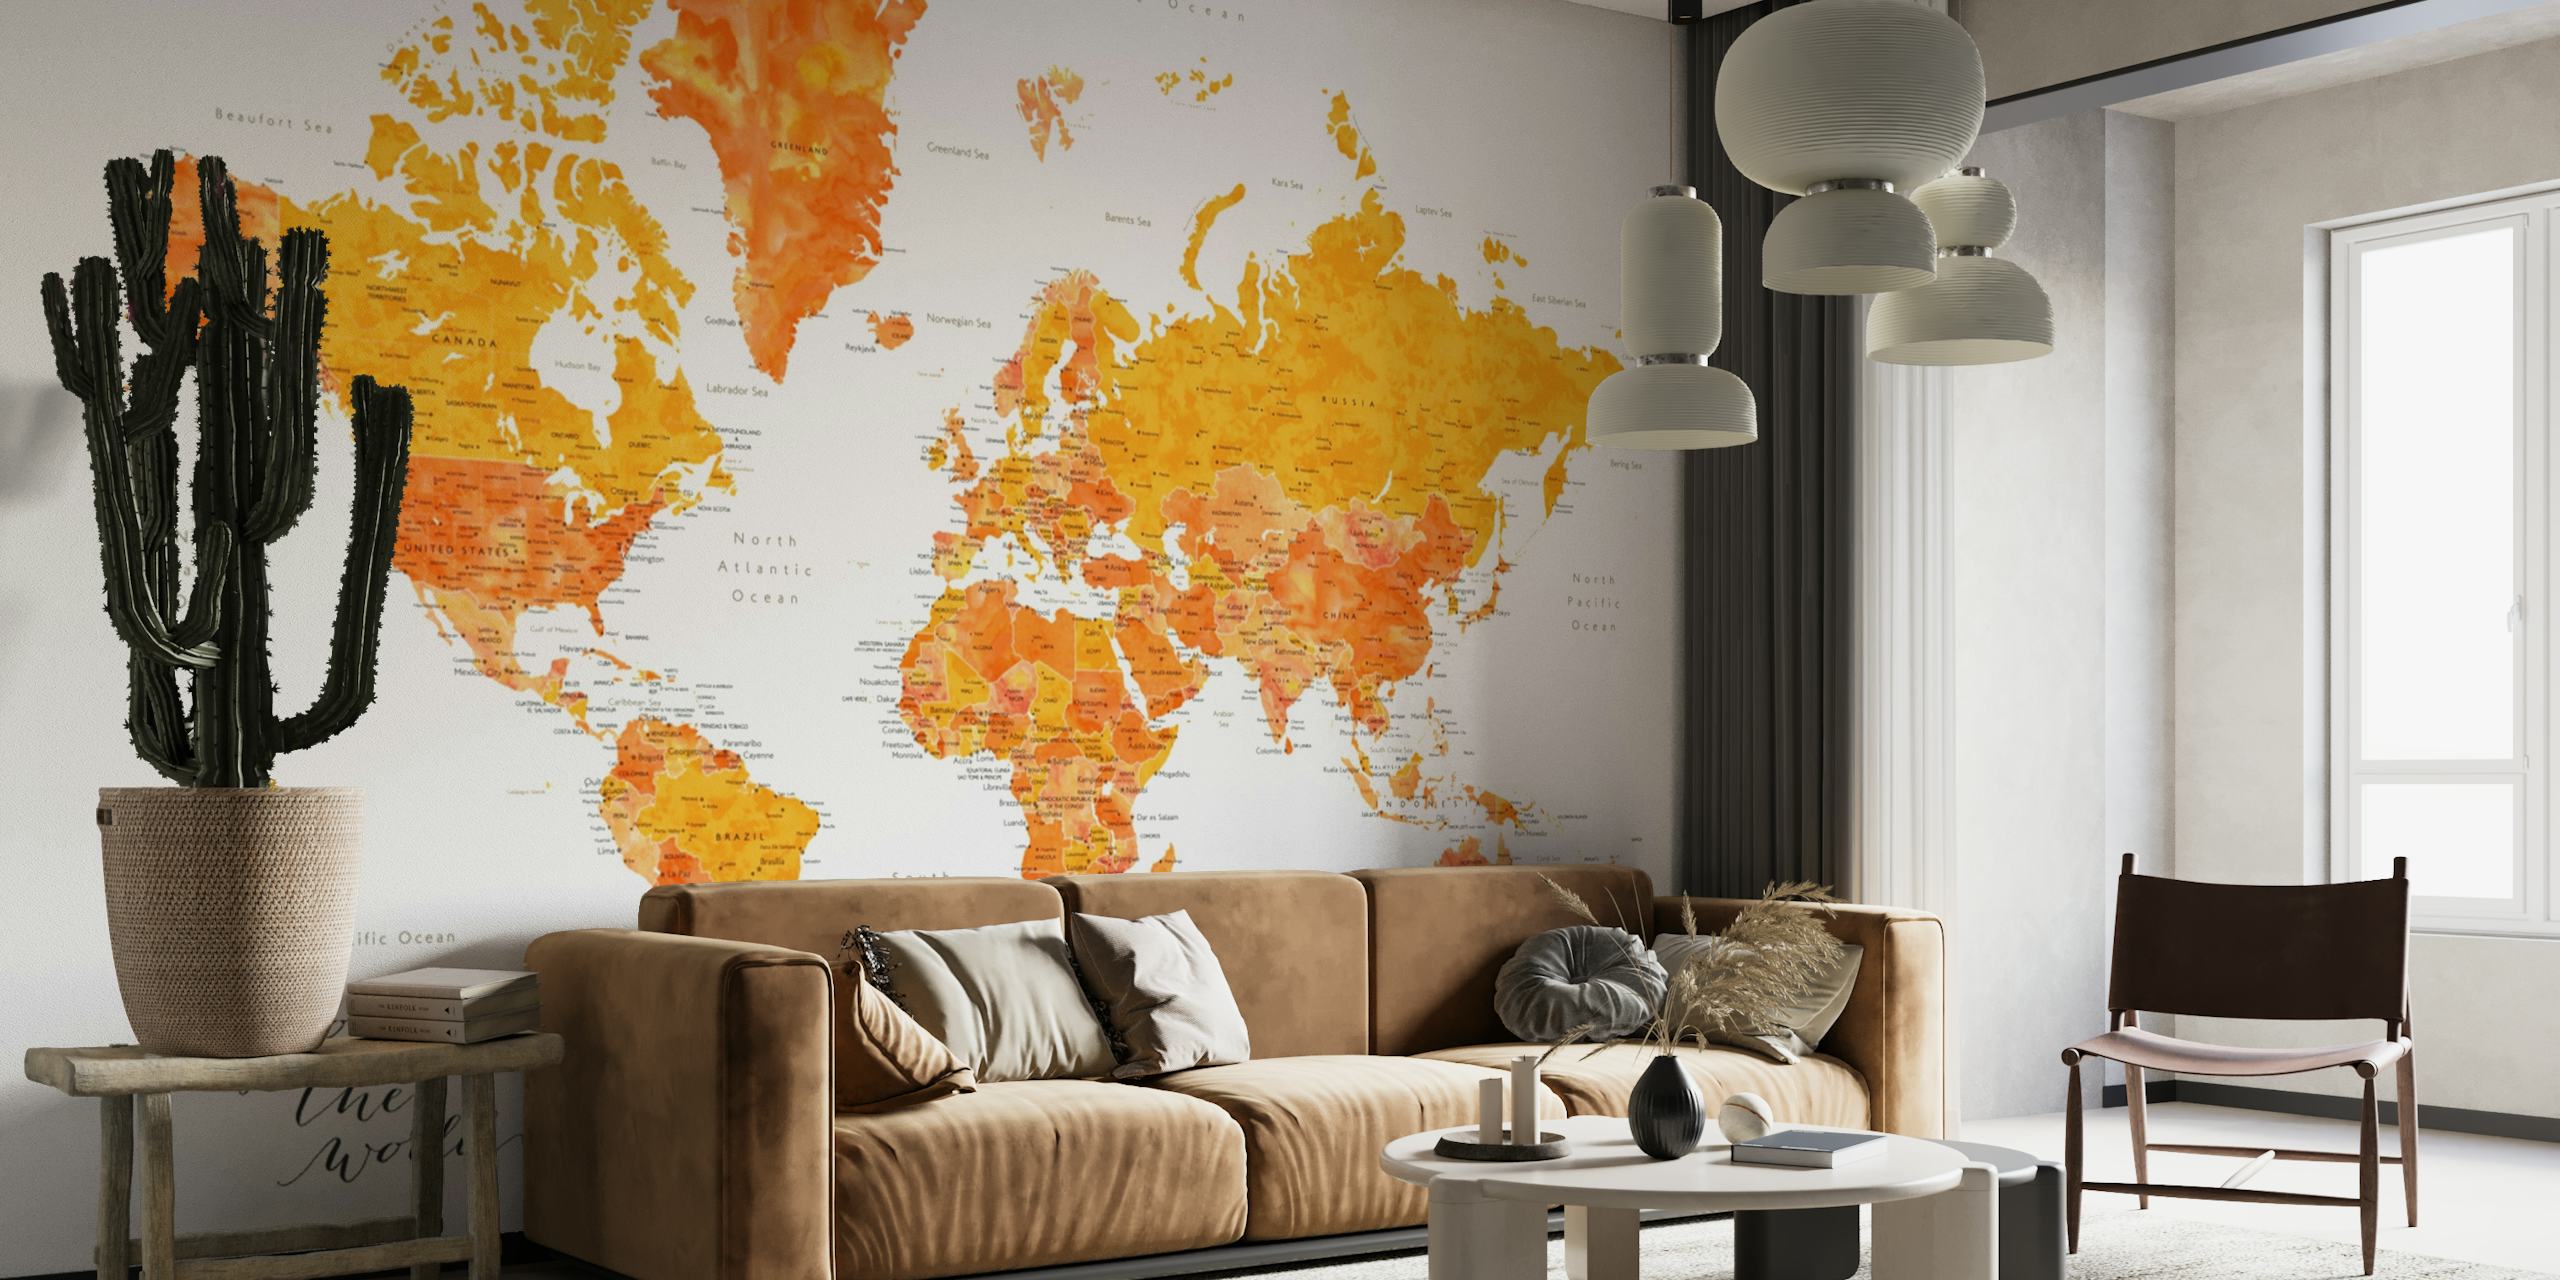 Orange and yellow world map wall mural titled 'Explore the World Carlotta'